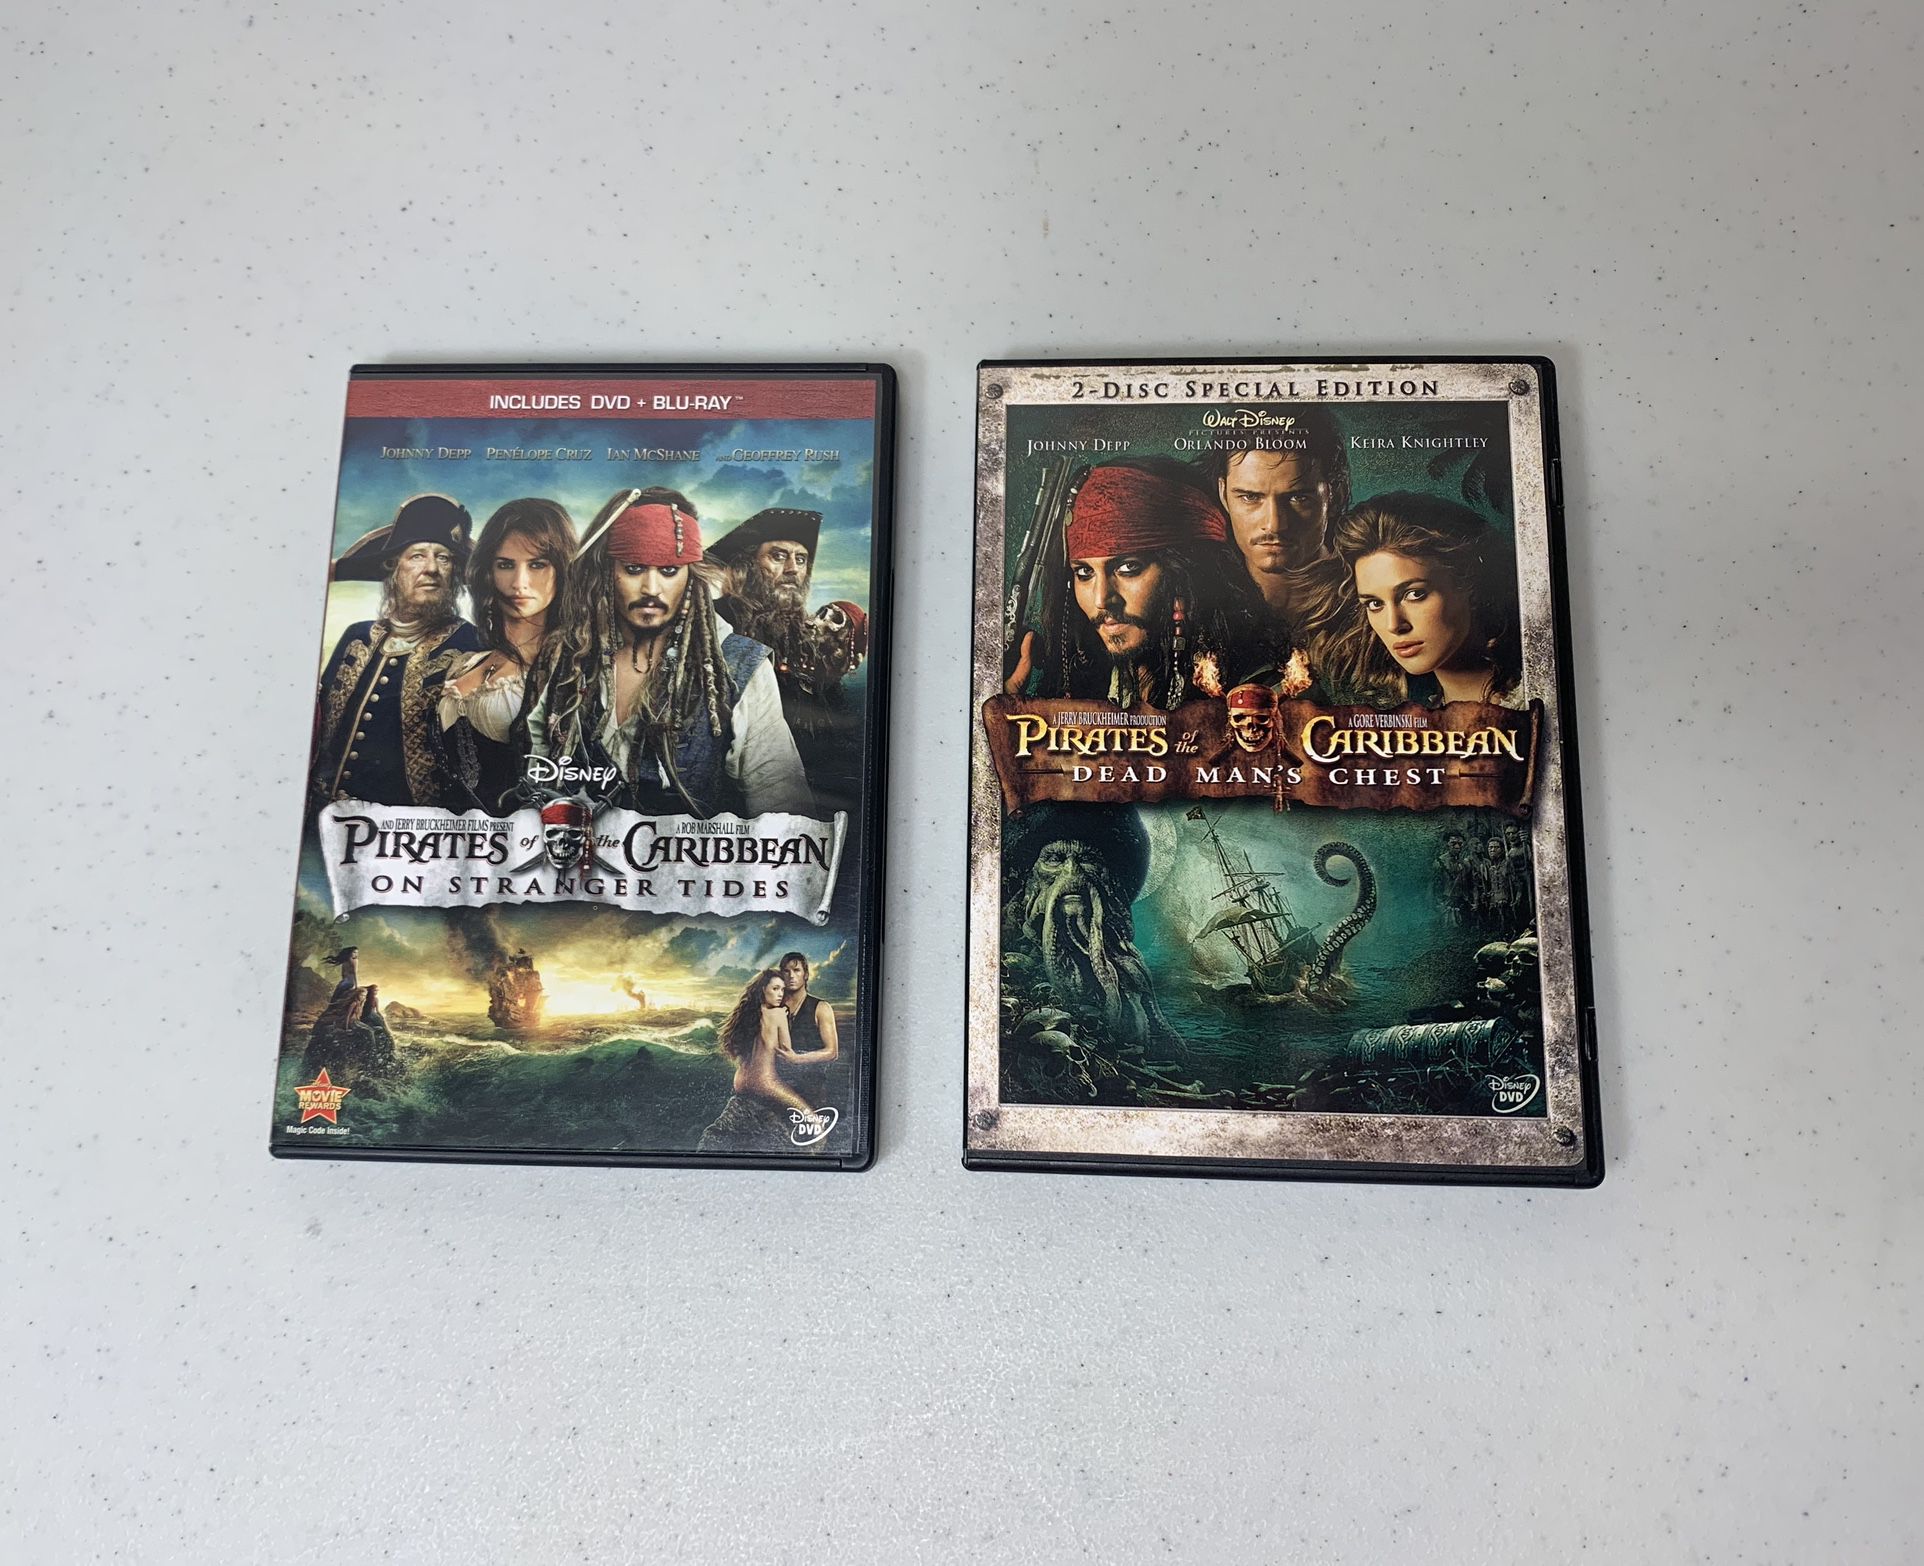 Pirates Of The Caribbean DVD Bundle Deal